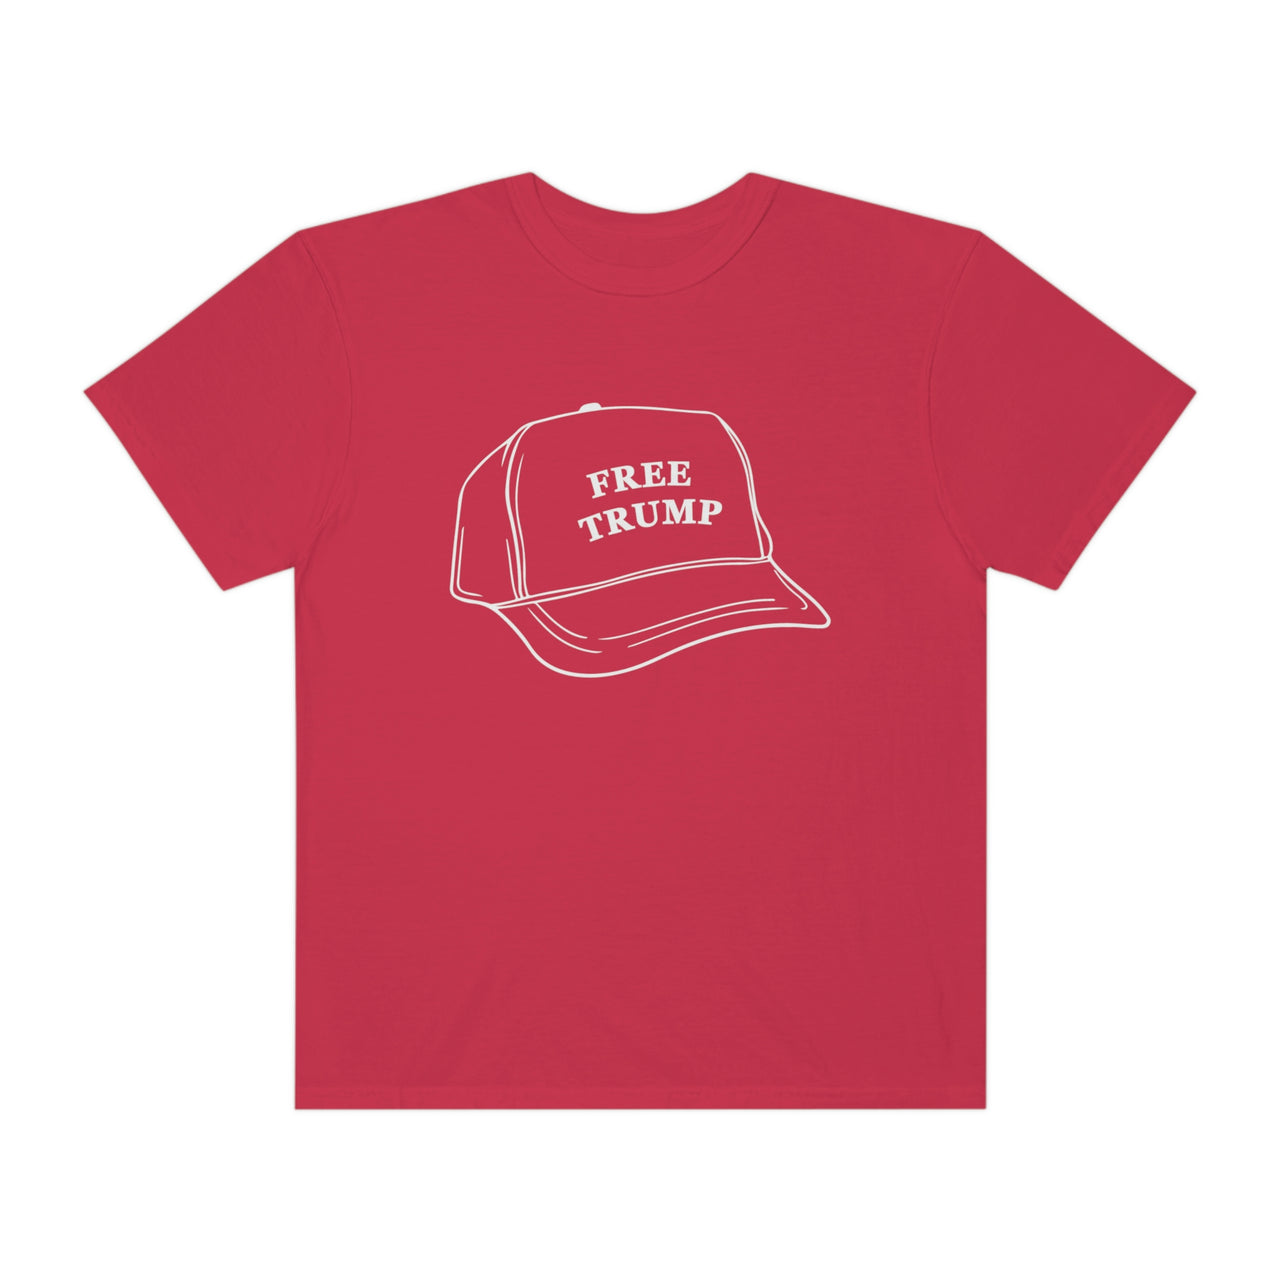 Free Trump Red T-Shirt